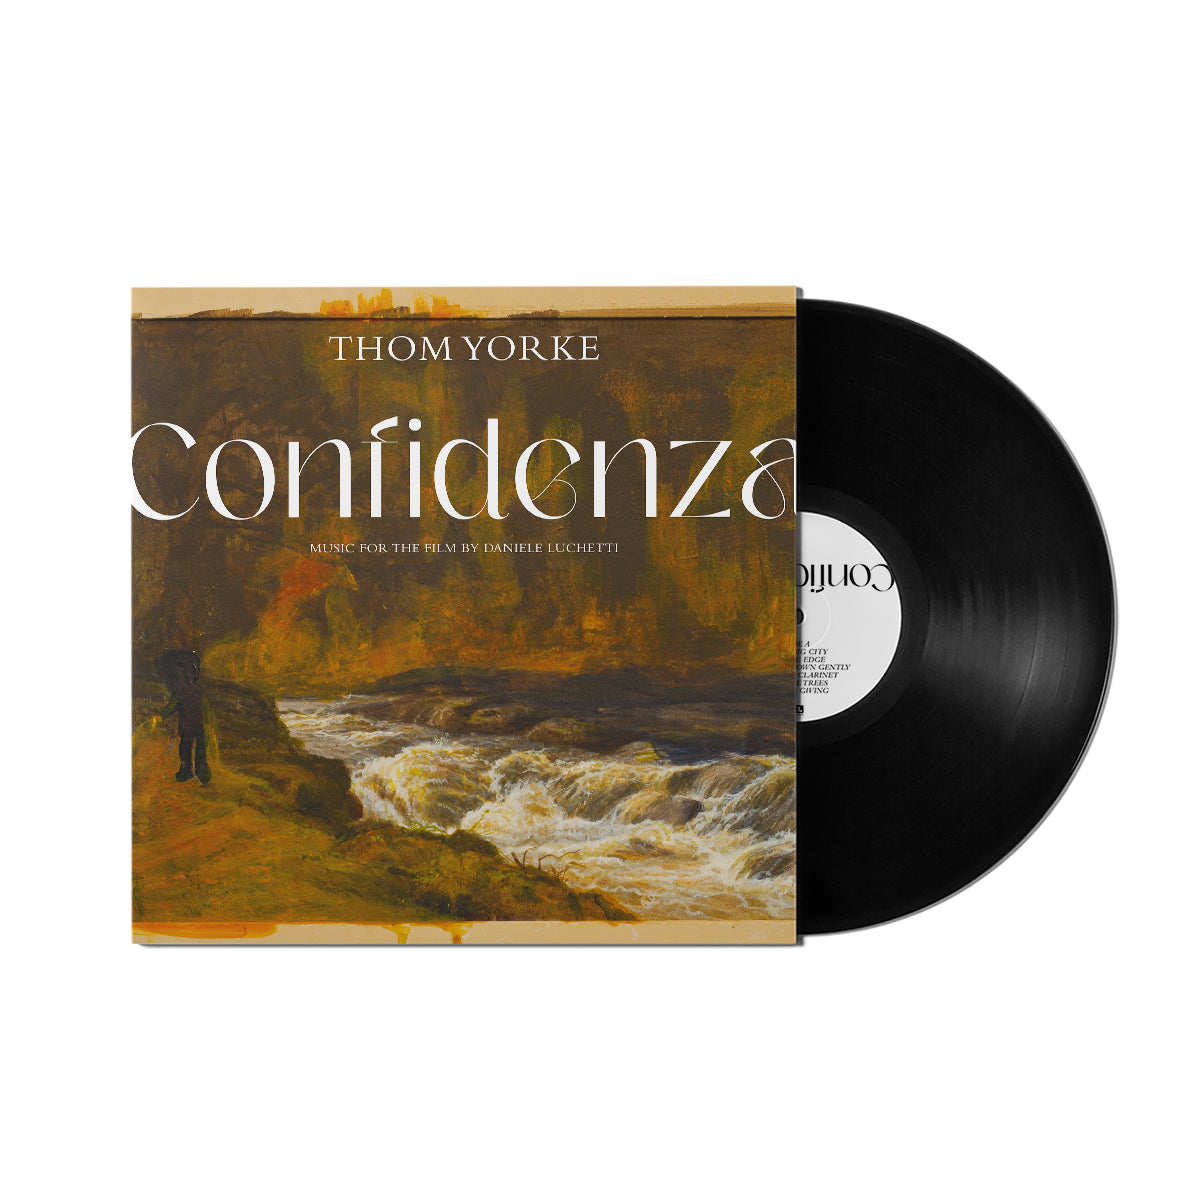 Thom Yorke - Confidenza (OST): Vinyl LP